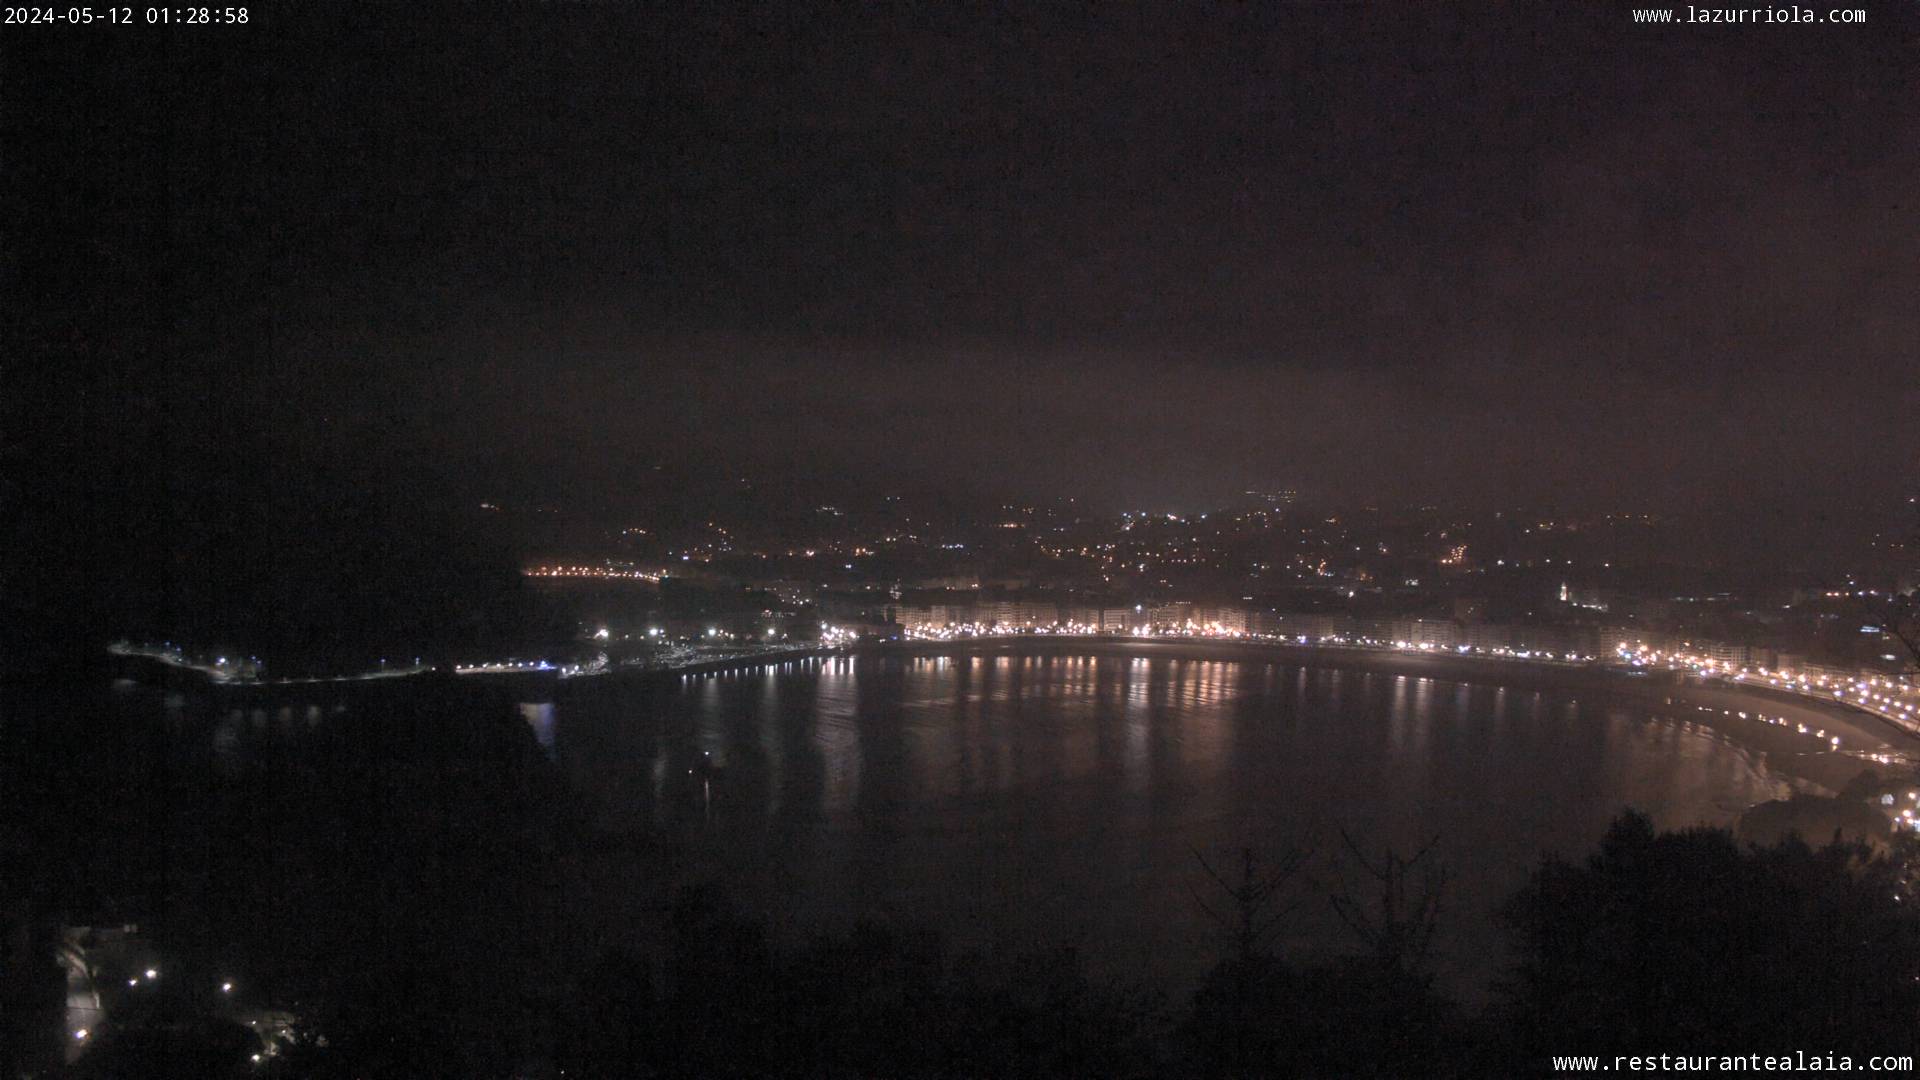 San Sebastián Vie. 01:30